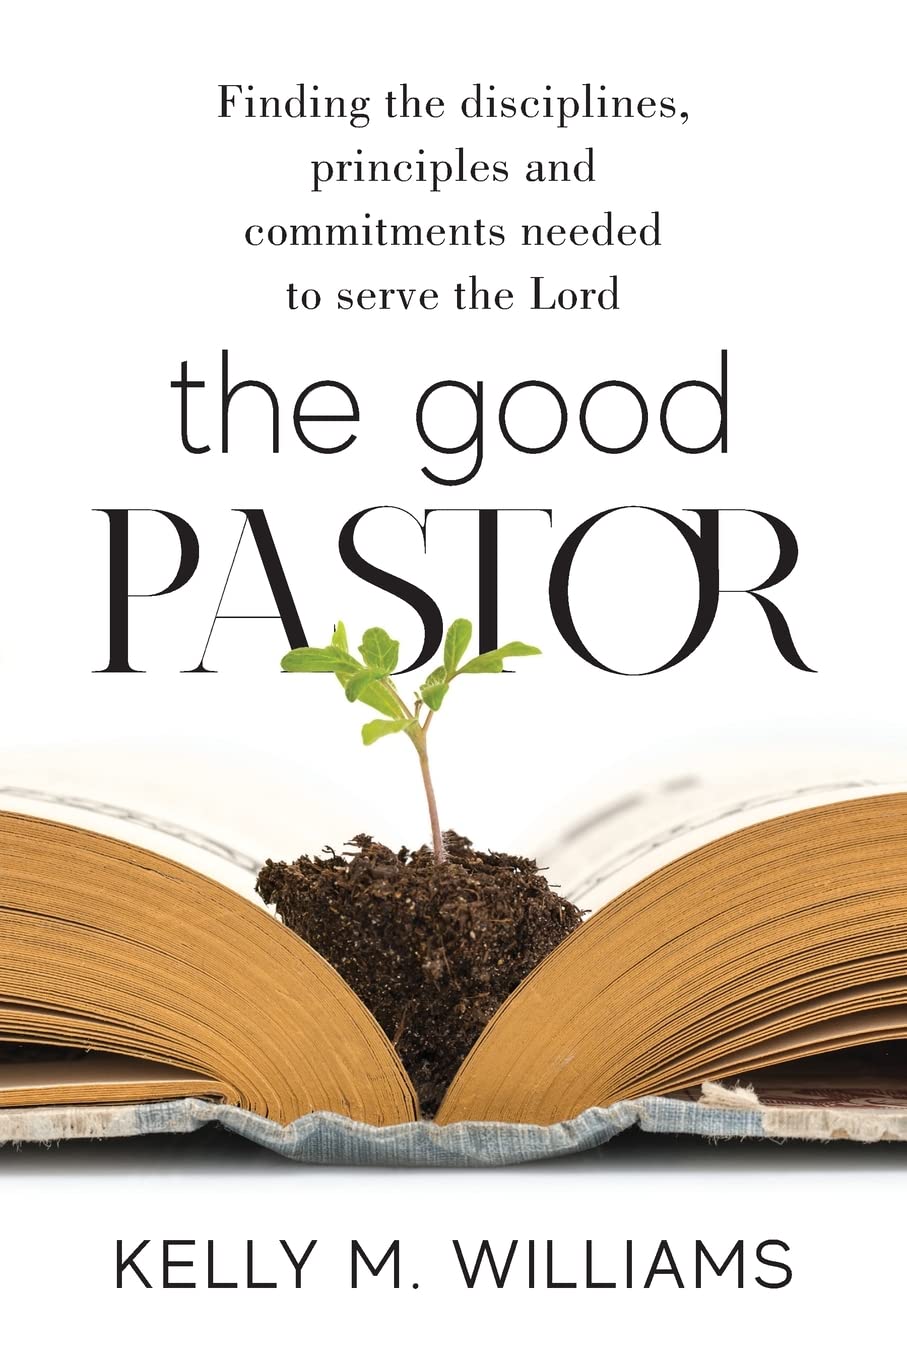 The Good Pastor